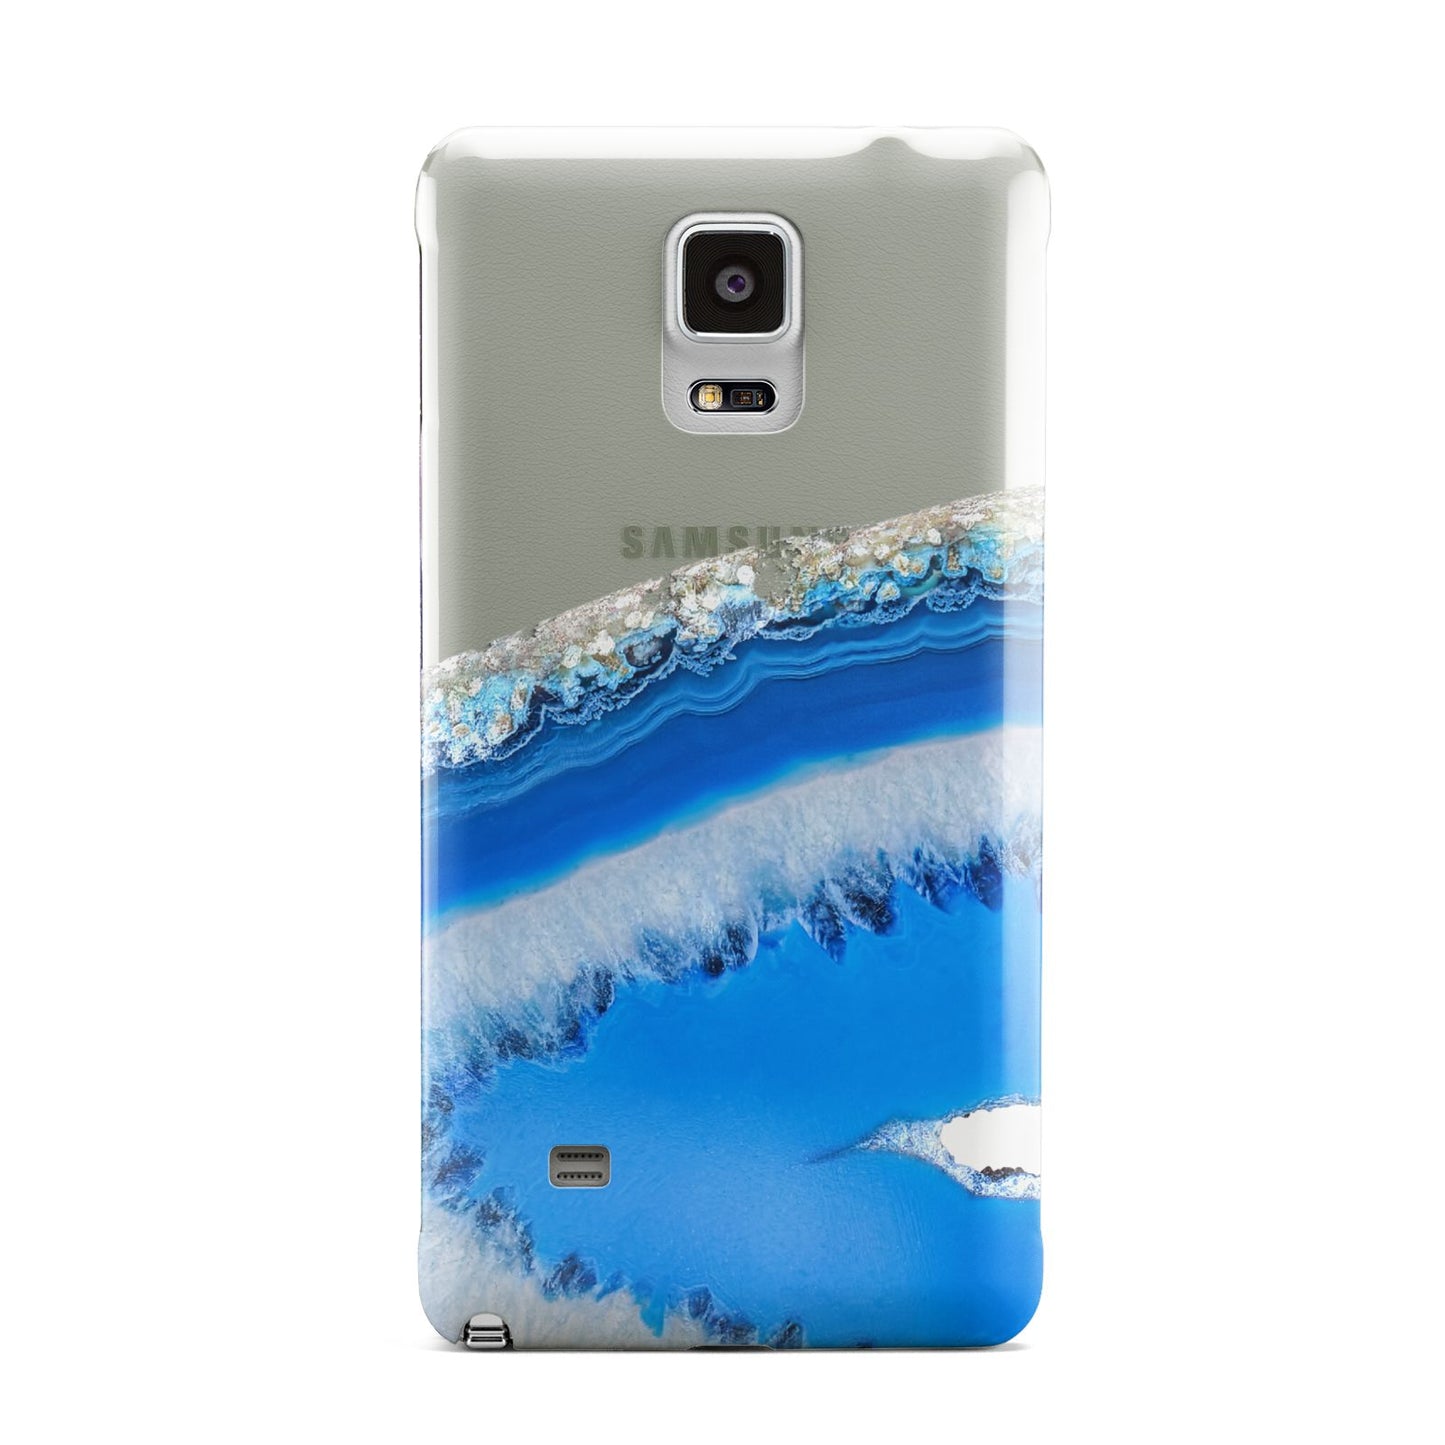 Agate Blue Samsung Galaxy Note 4 Case